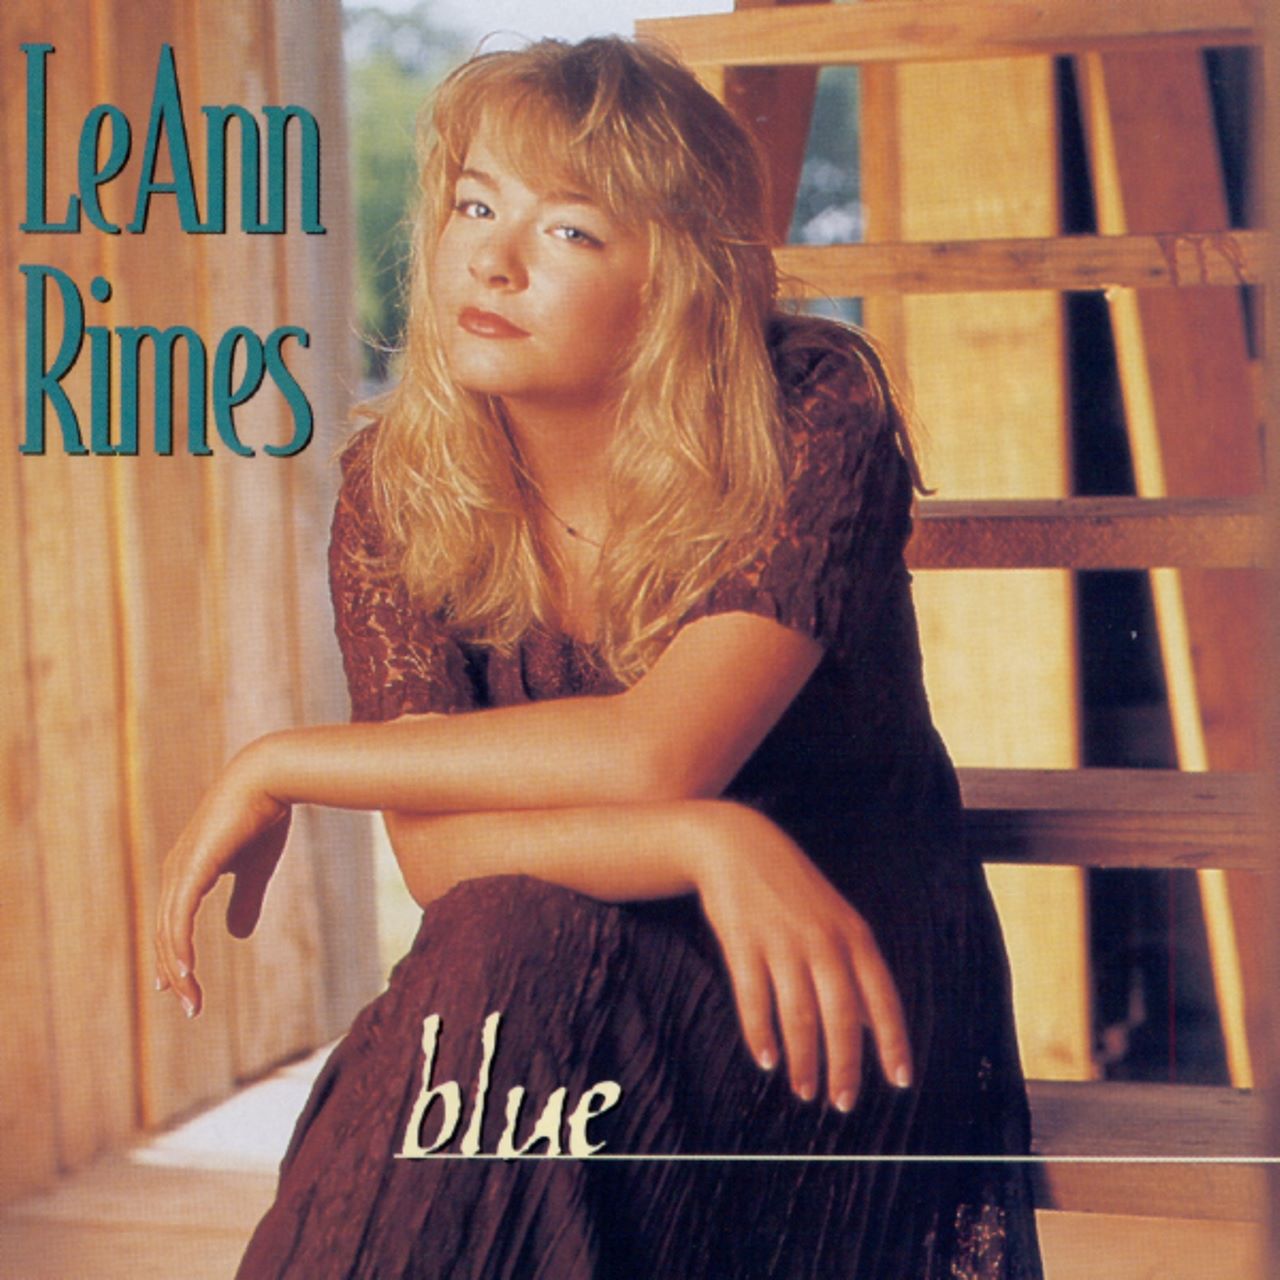 LeAnn Rimes - Blue cover album